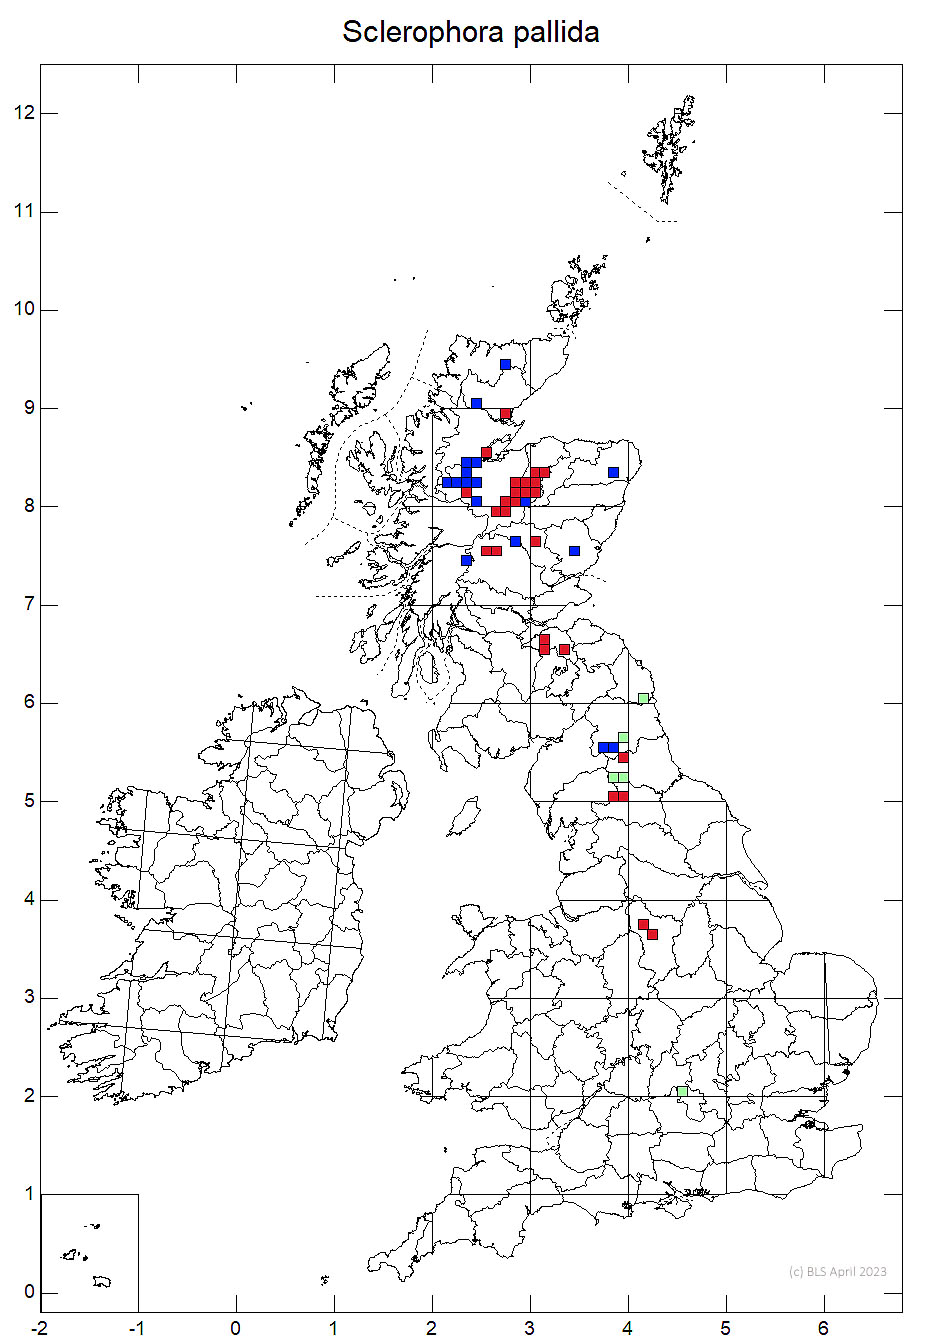 Sclerophora pallida 10km sq distribution map